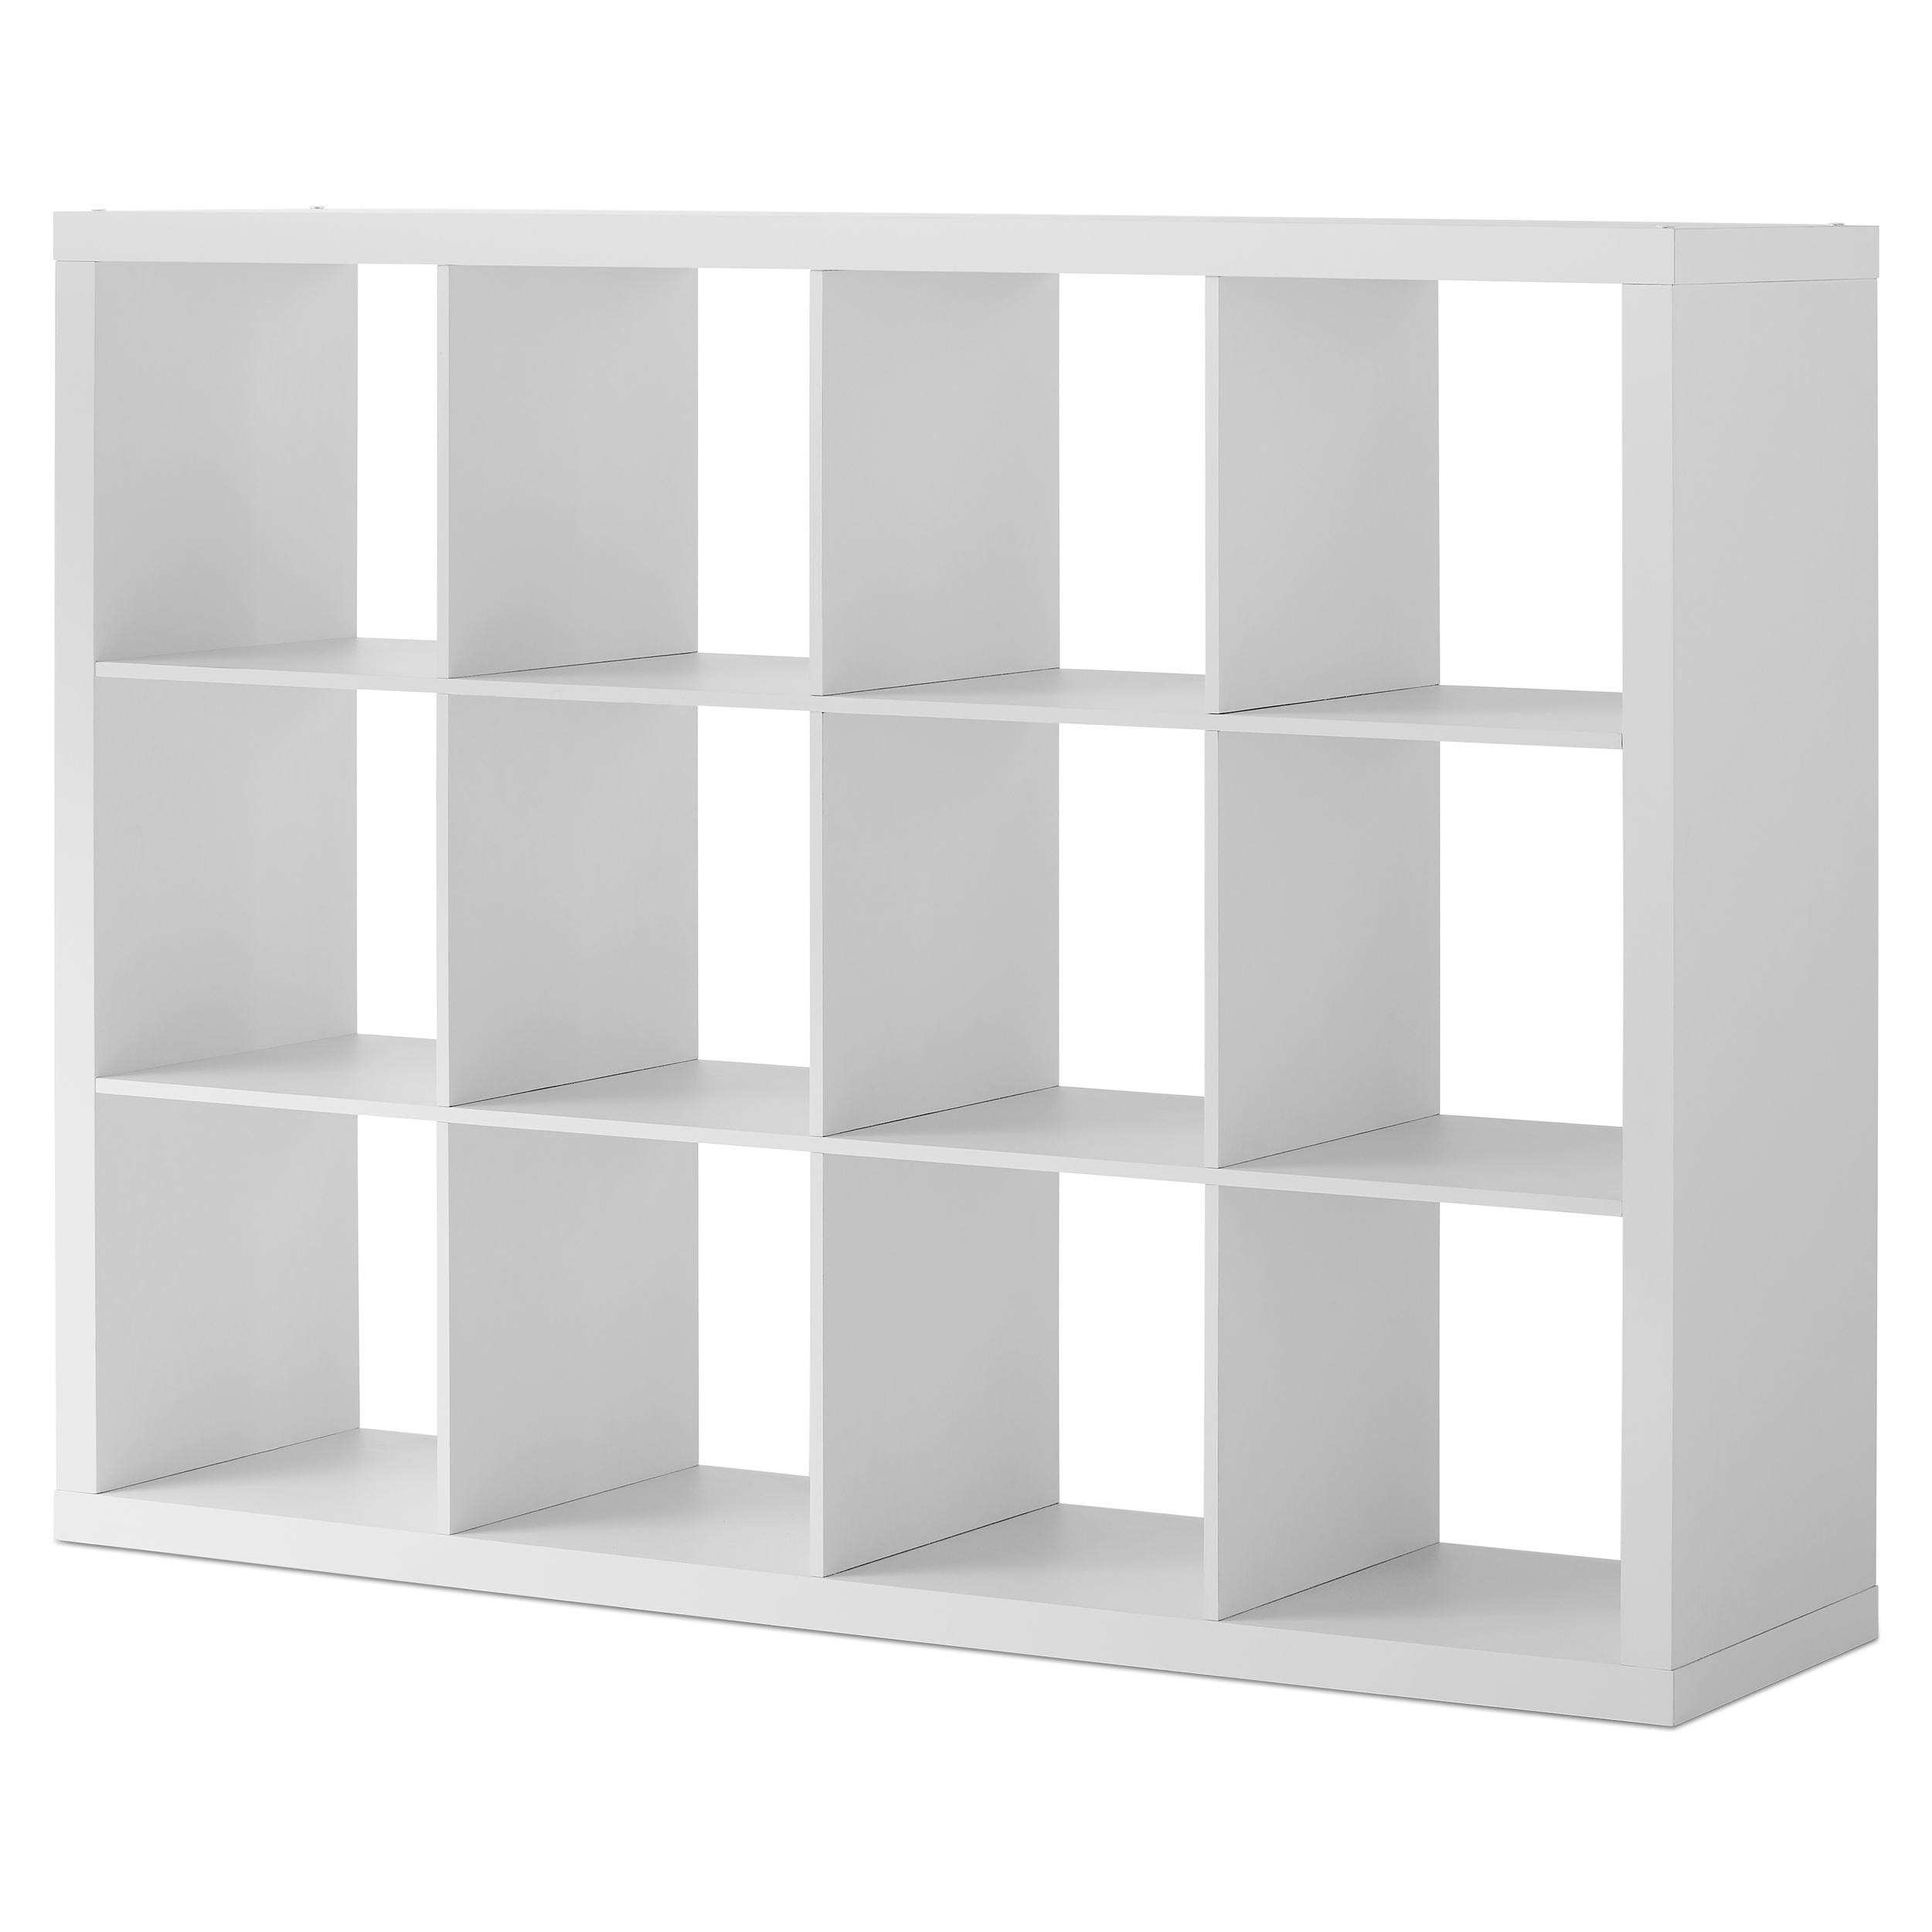 Better Homes & Gardens 12-Cube Storage Organizer, White Texture - image 1 of 6